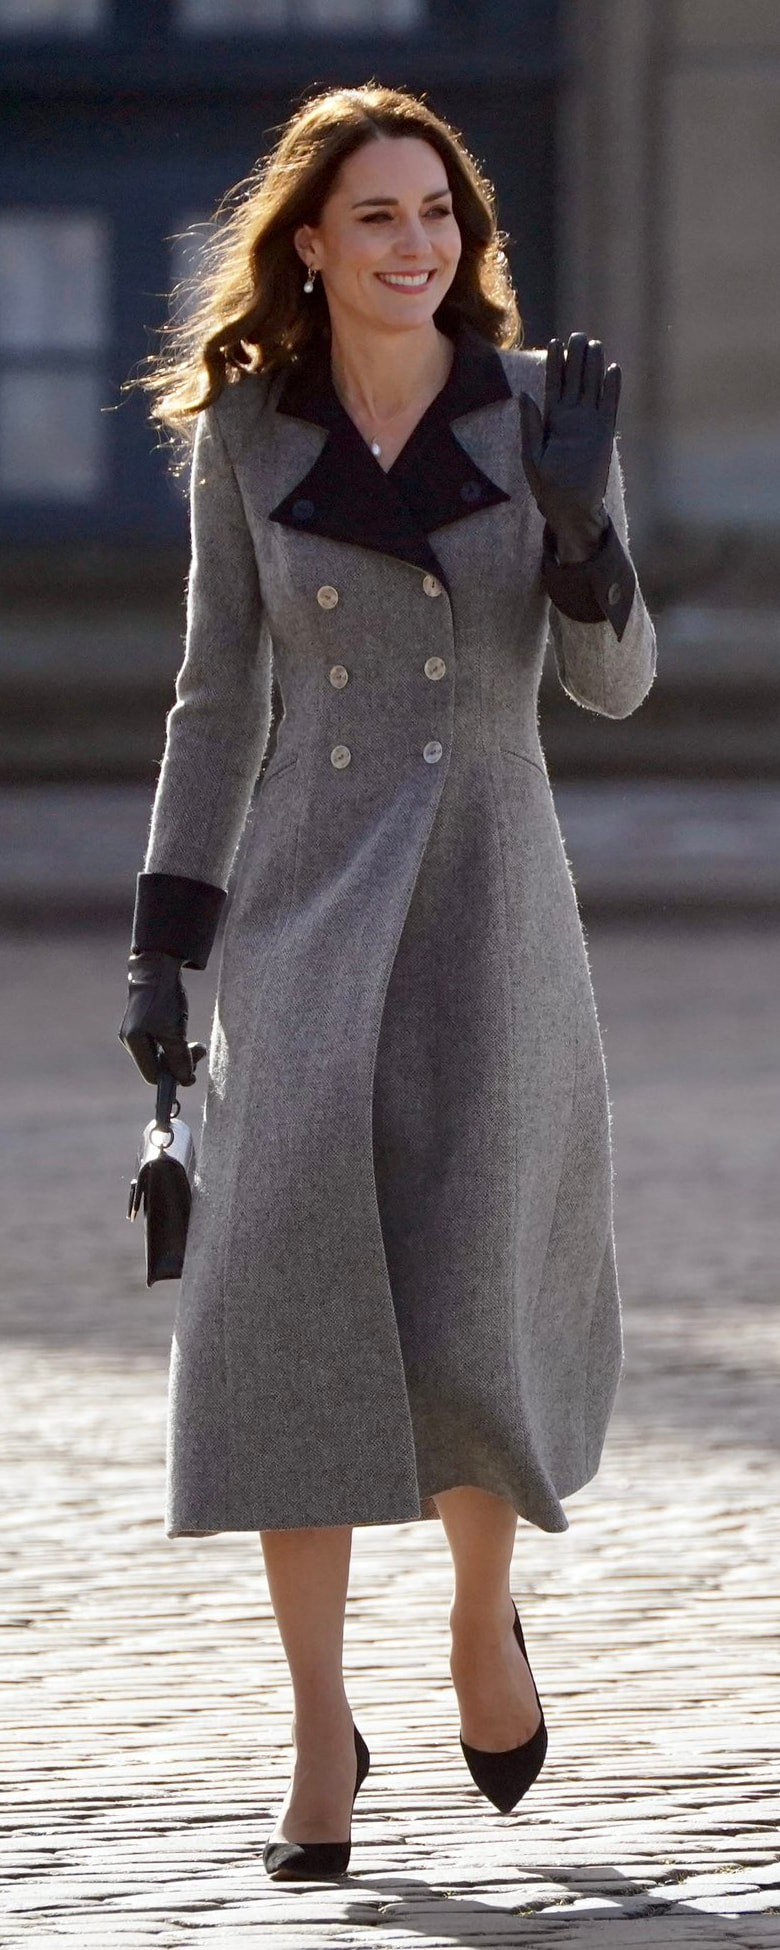 Catherine Walker Marine Coat as seen on Kate Middleton, The Duchess of Cambridge.